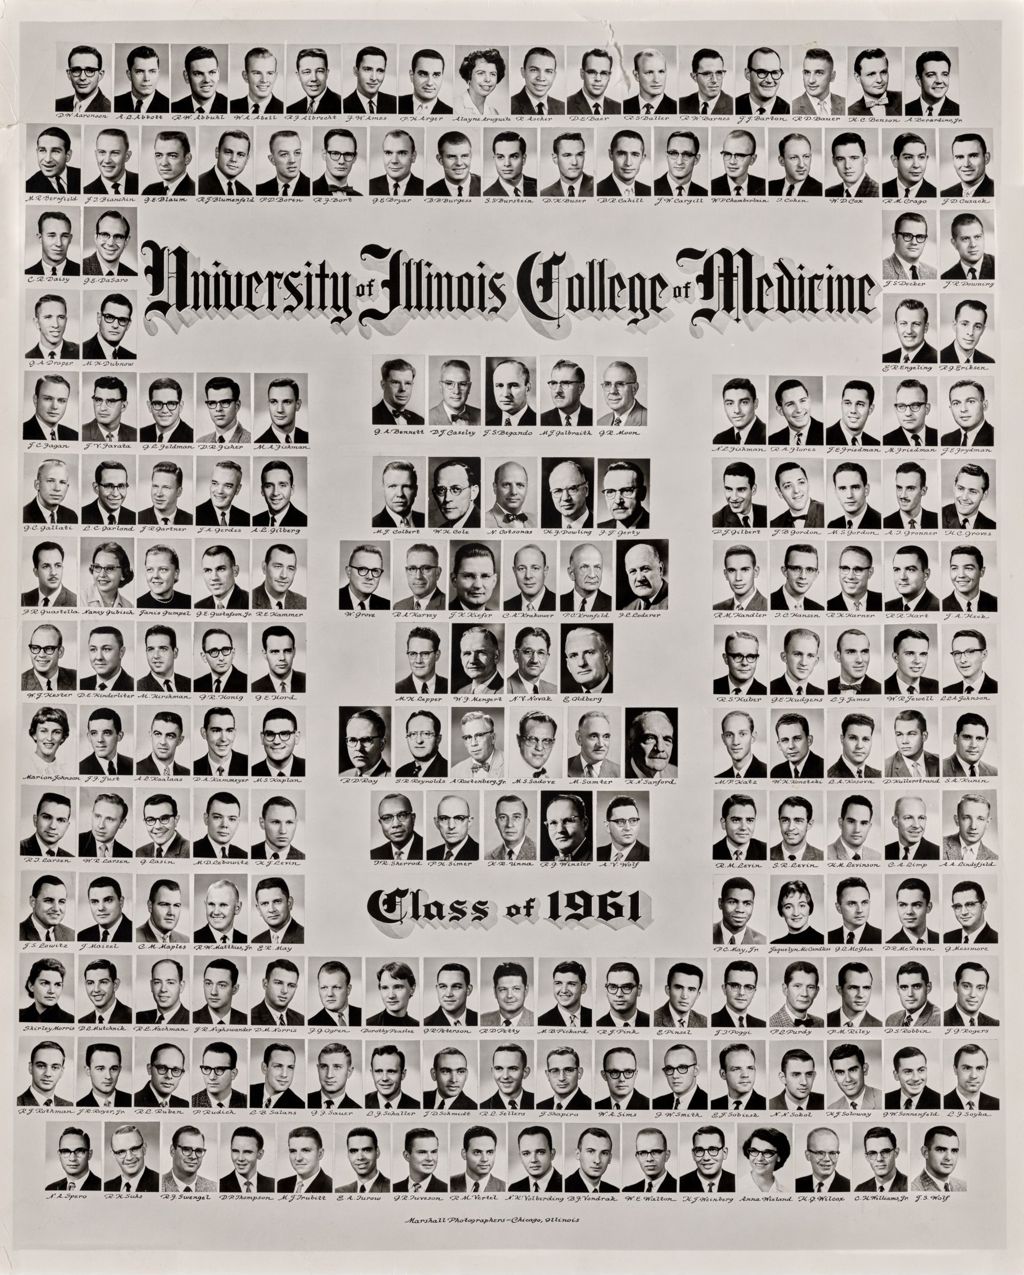 Miniature of 1961 graduating class, University of Illinois College of Medicine